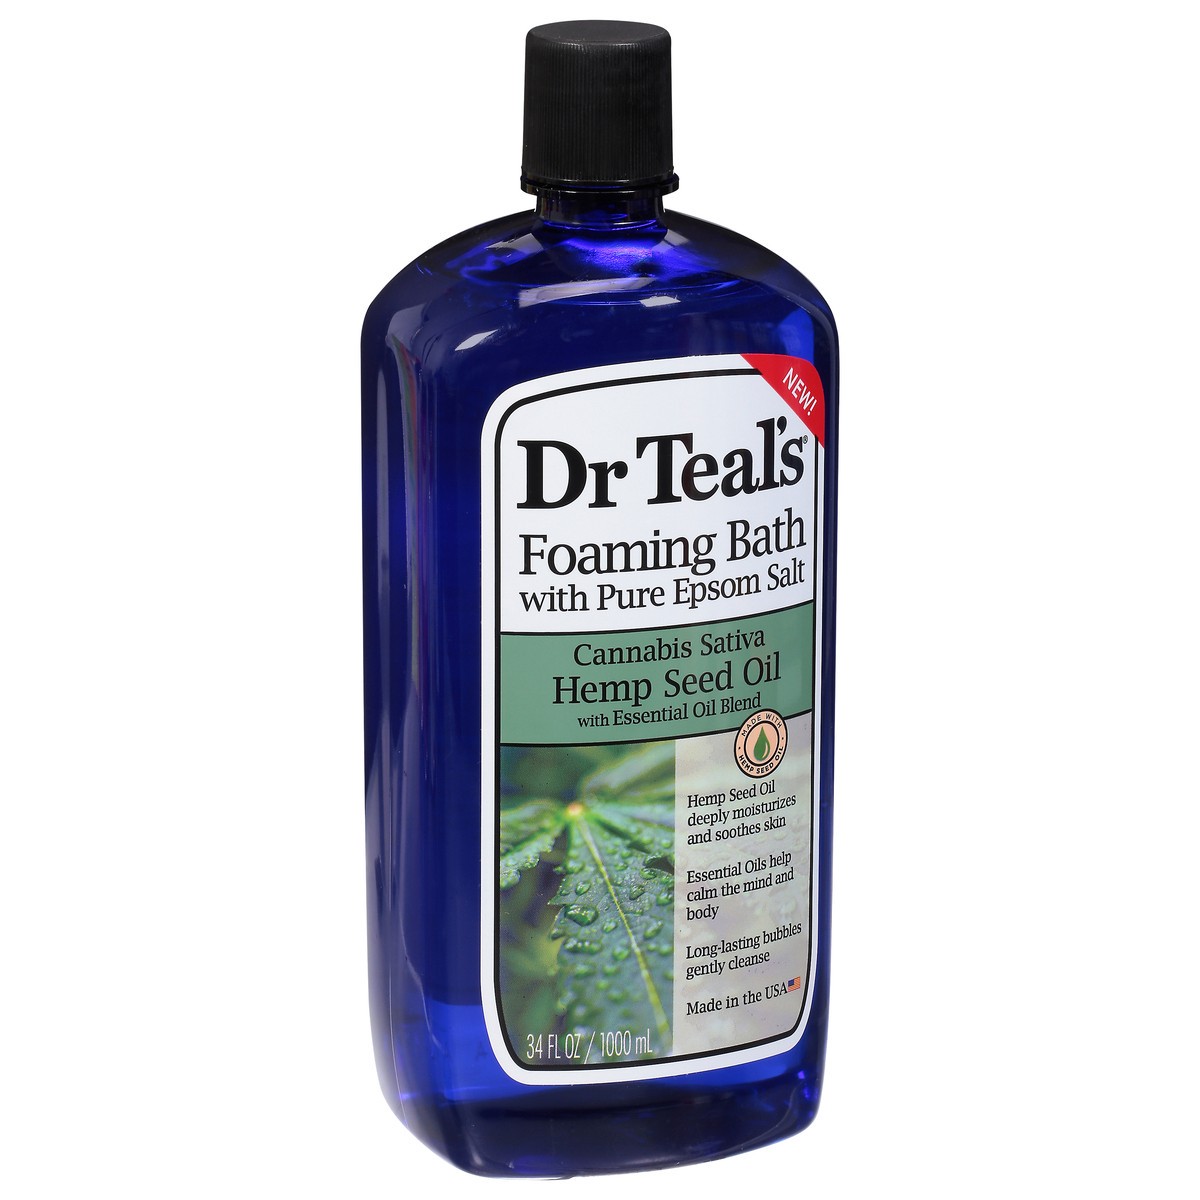 slide 2 of 9, Dr. Teal's Cannabis Sativa Hemp Seed Oil Foaming Bath with Pure Epsom Salt 34 fl oz, 34 fl oz